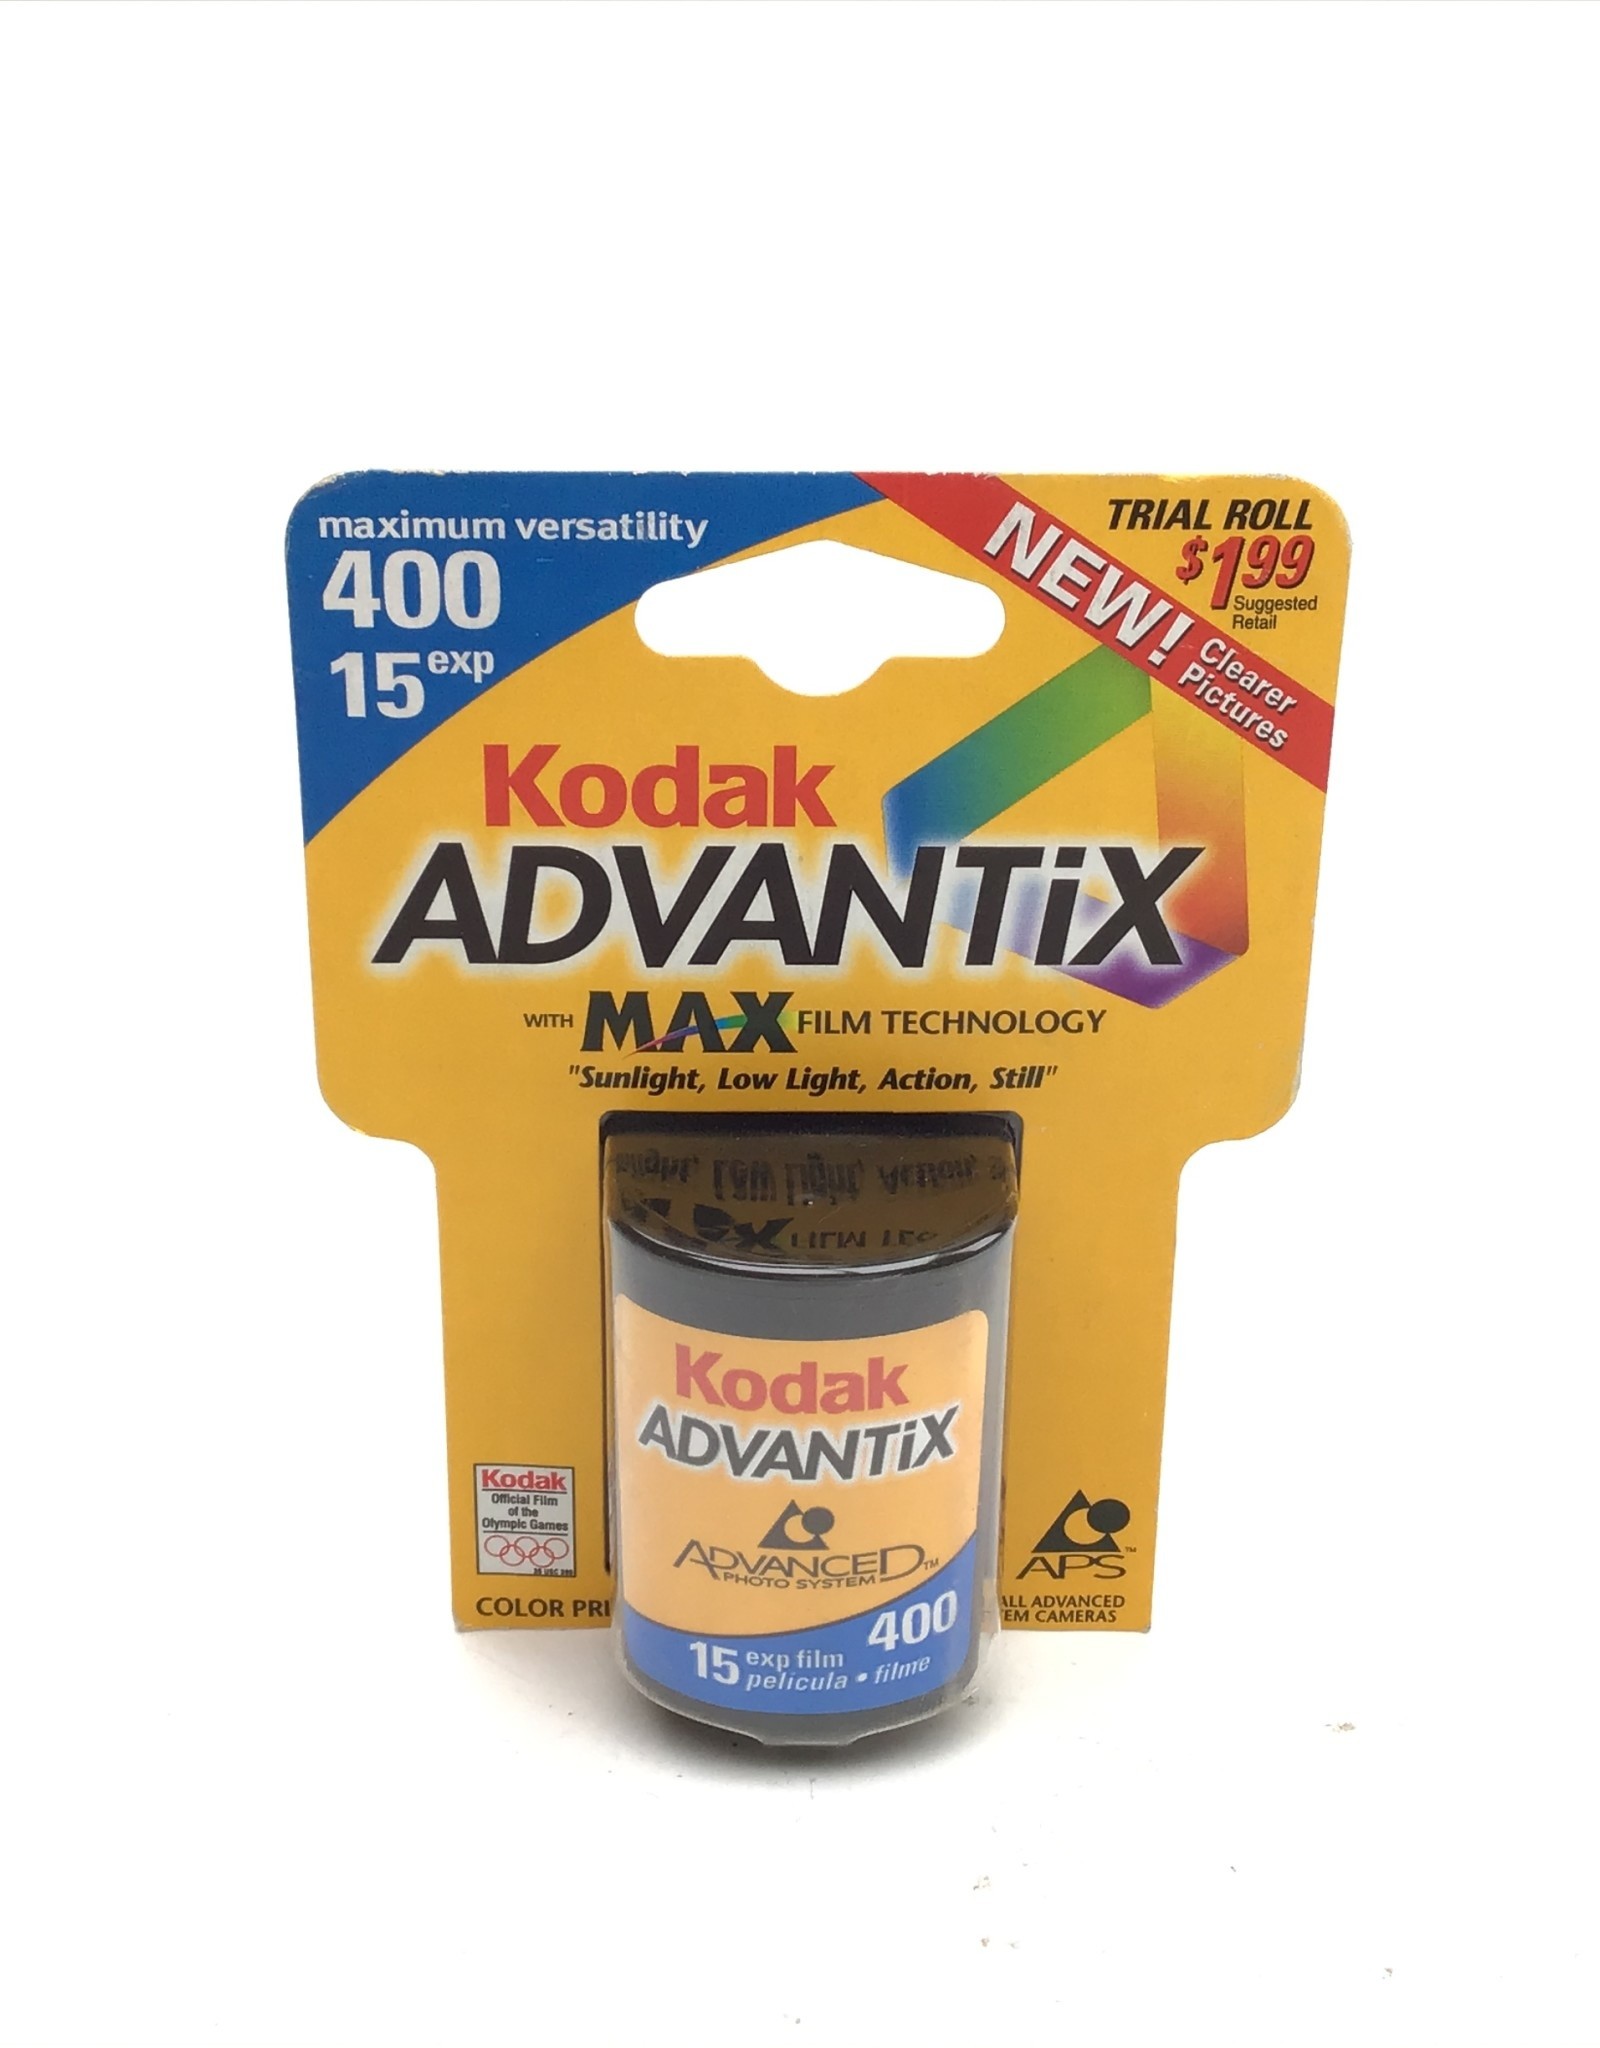 Kodak APS Advantix 400 15 EXP. Expired Film 03/2002